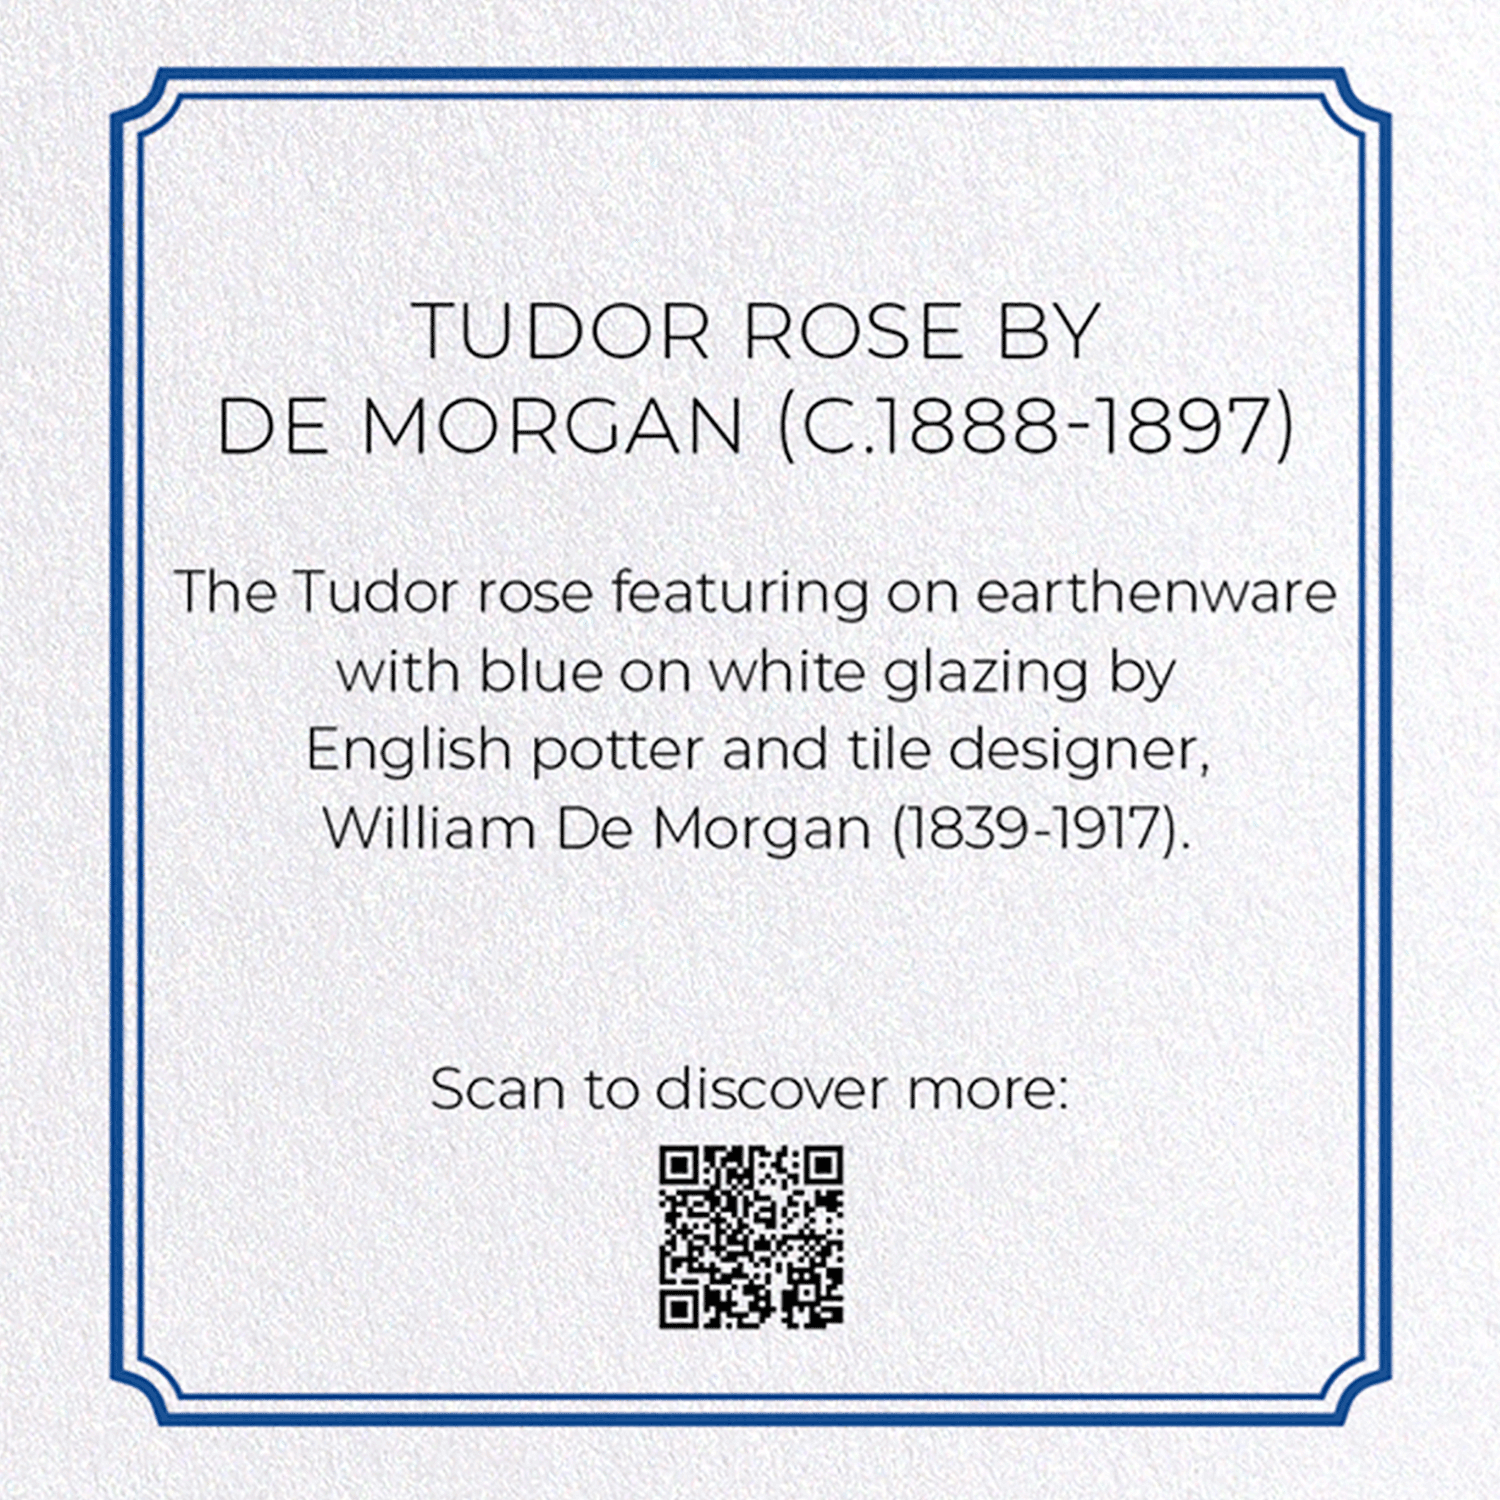 TUDOR ROSE BY DE MORGAN (C.1888-1897)